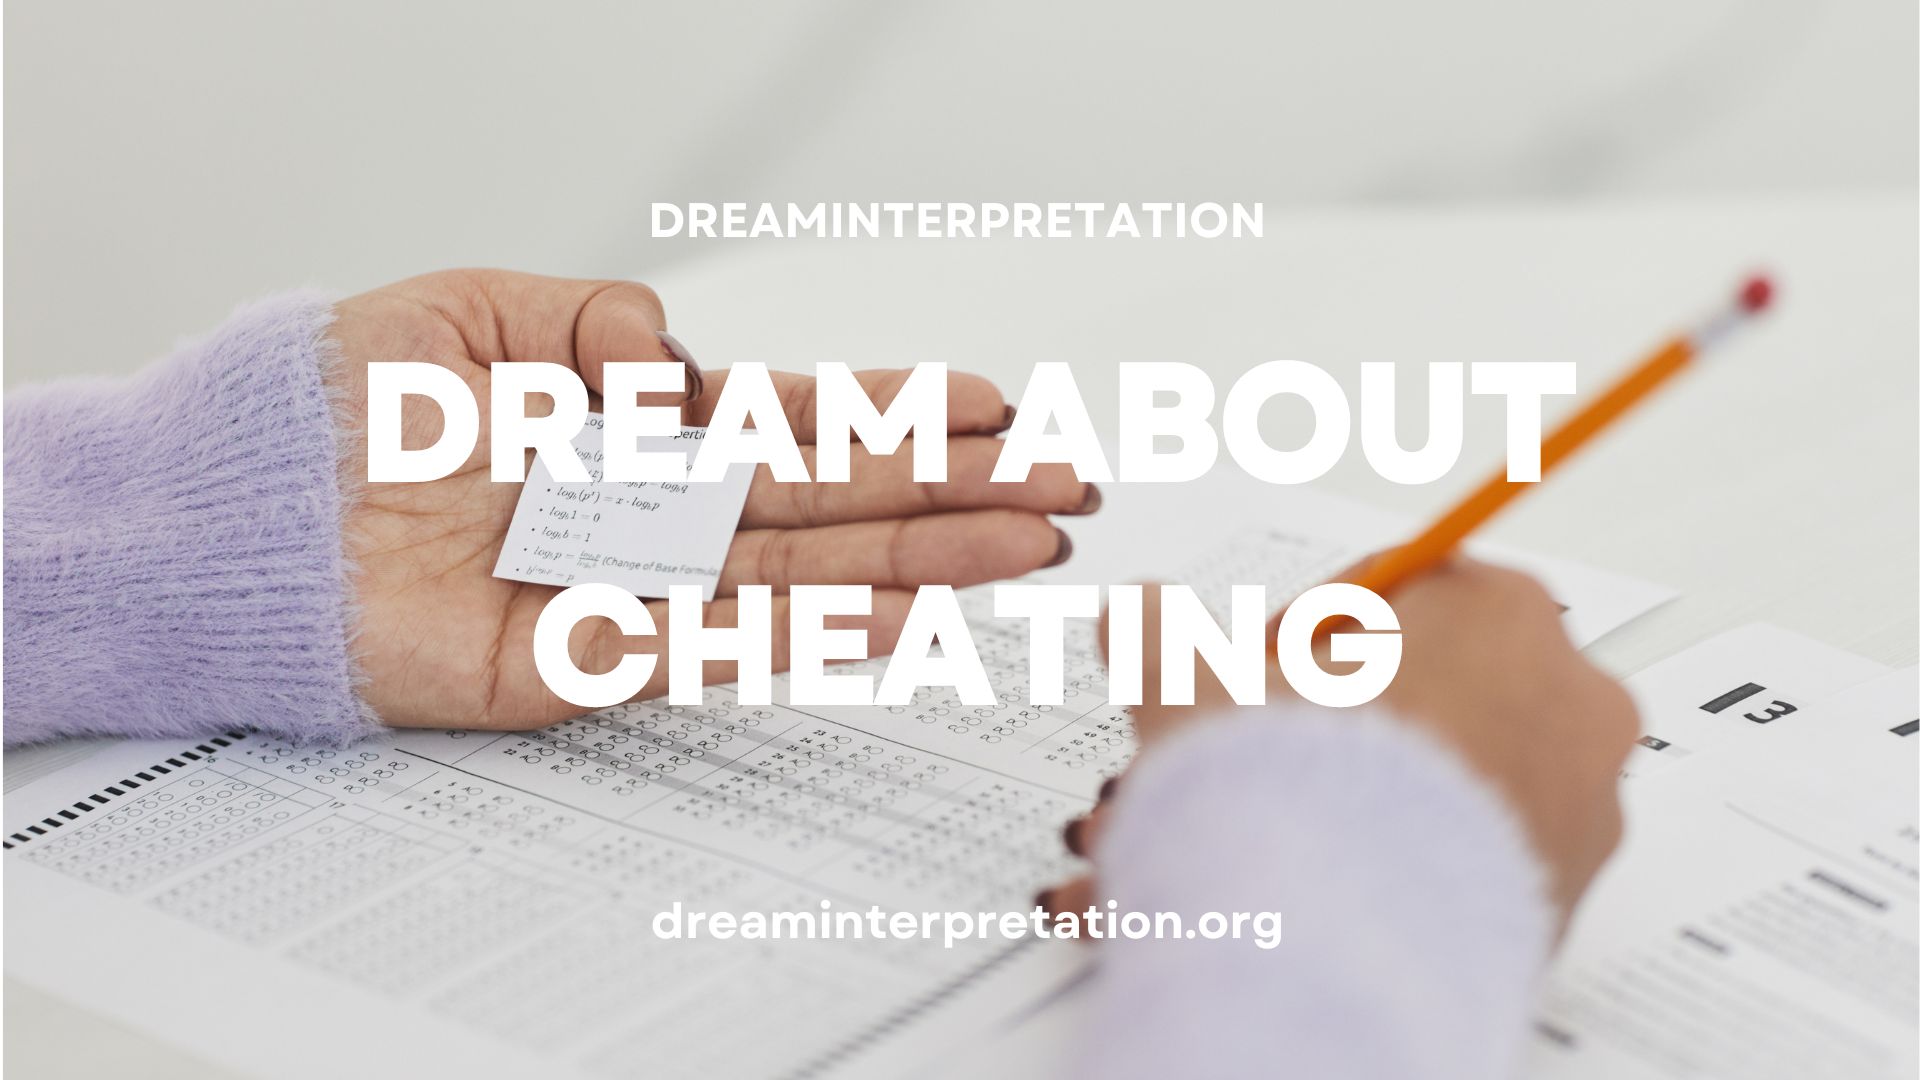 Dream about Cheating (Interpretation & Spiritual Meaning)